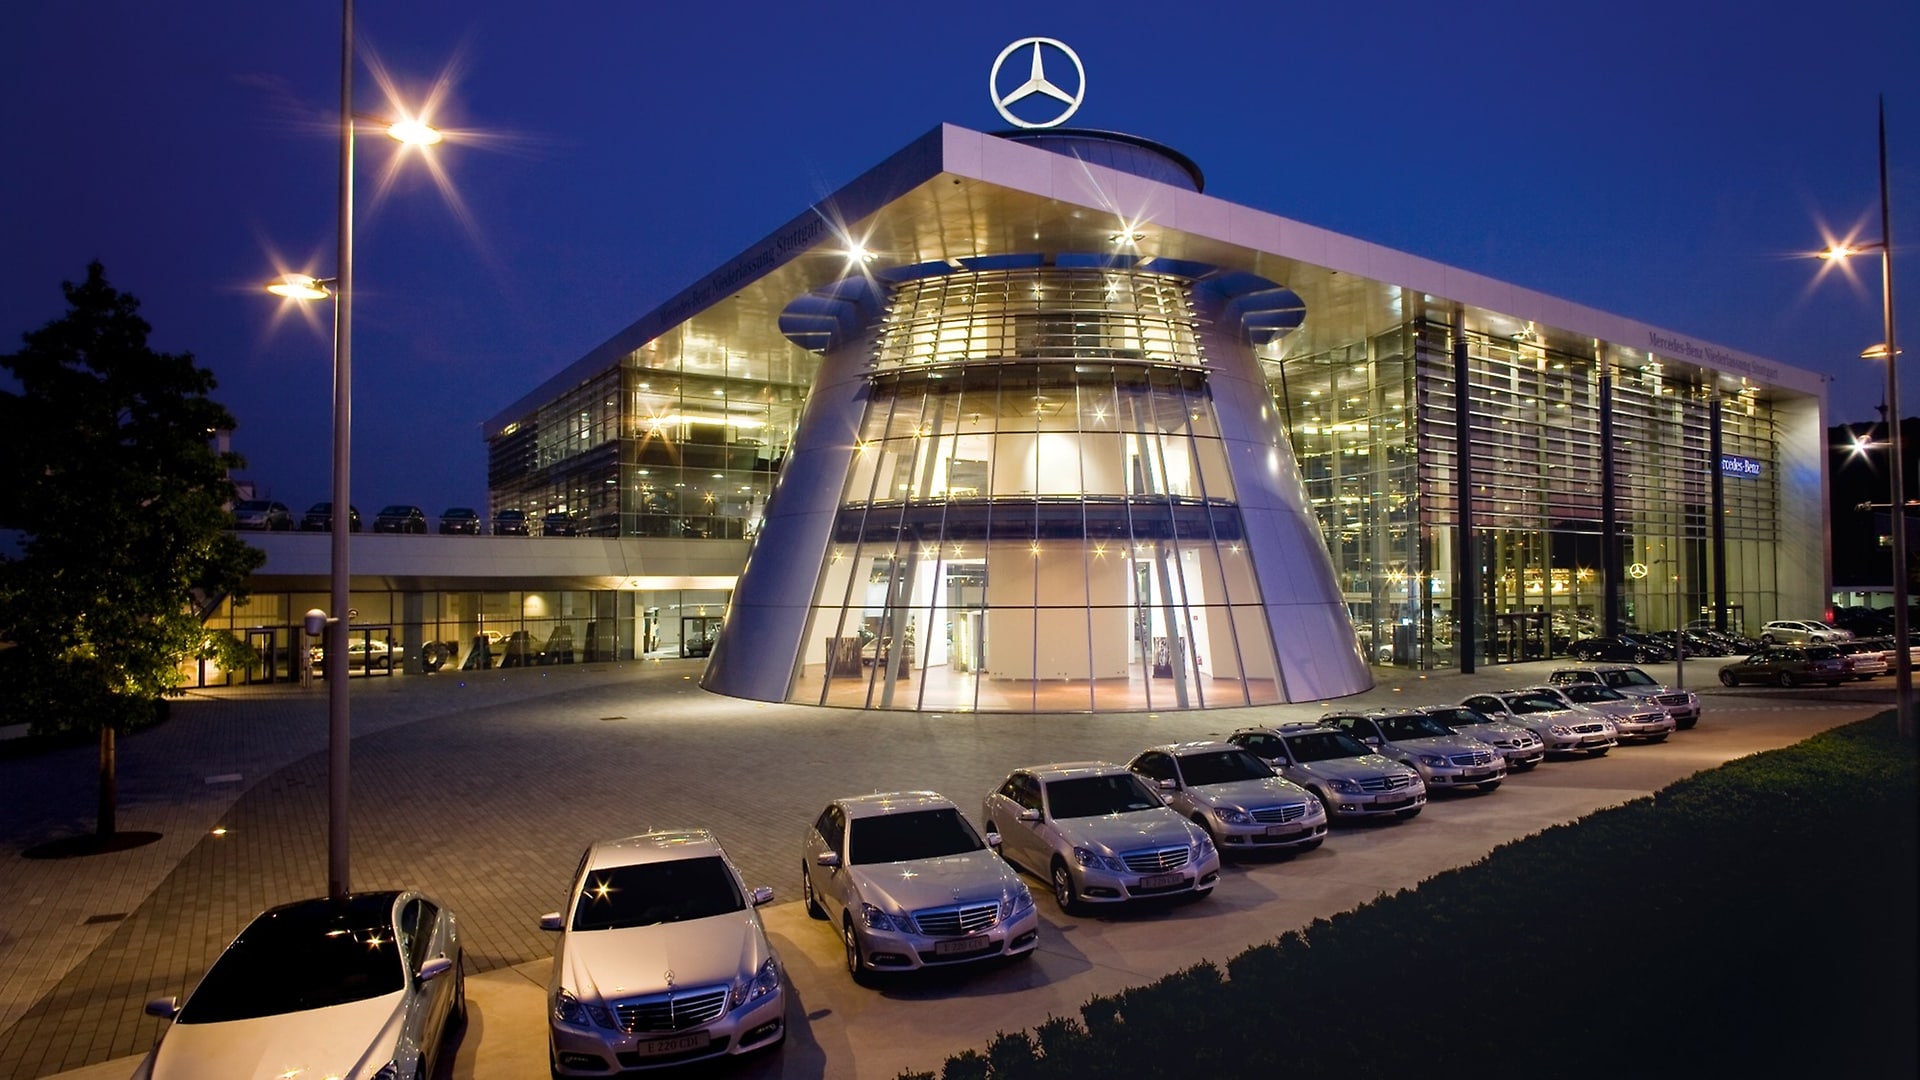 Mercedes Benz Niederlassung Stuttgart Mercedes Benz Group gt Karriere gt 220 ber uns gt Standorte